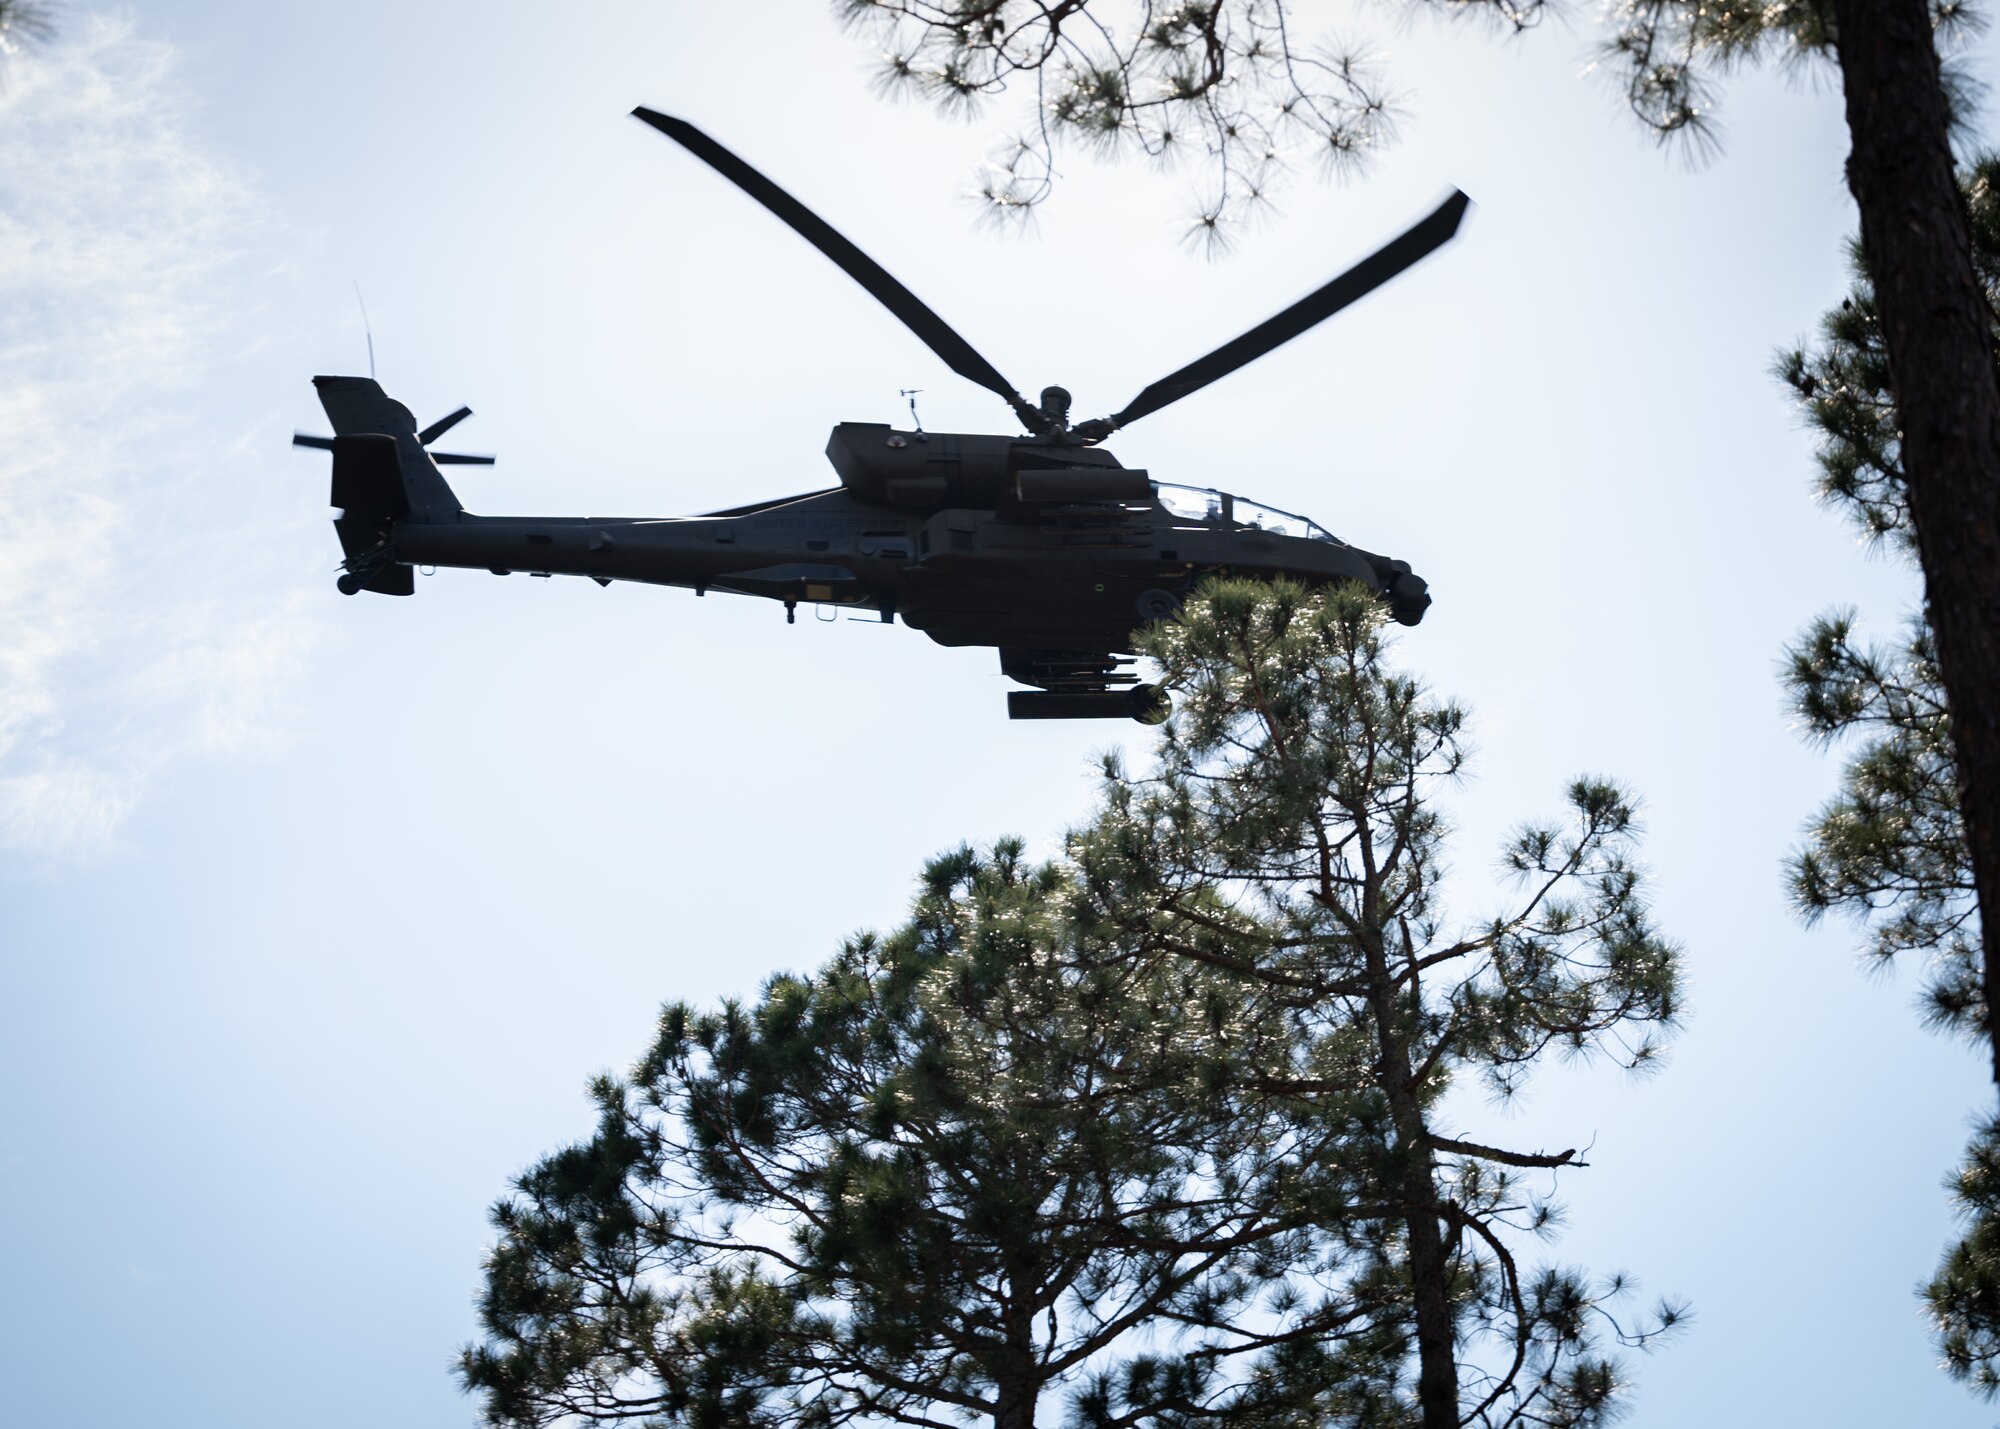 An Army AH-64 Apache helicopter flies over Camden Battlefield during reinterment ceremony for fallen Revolutionary War soldiers.